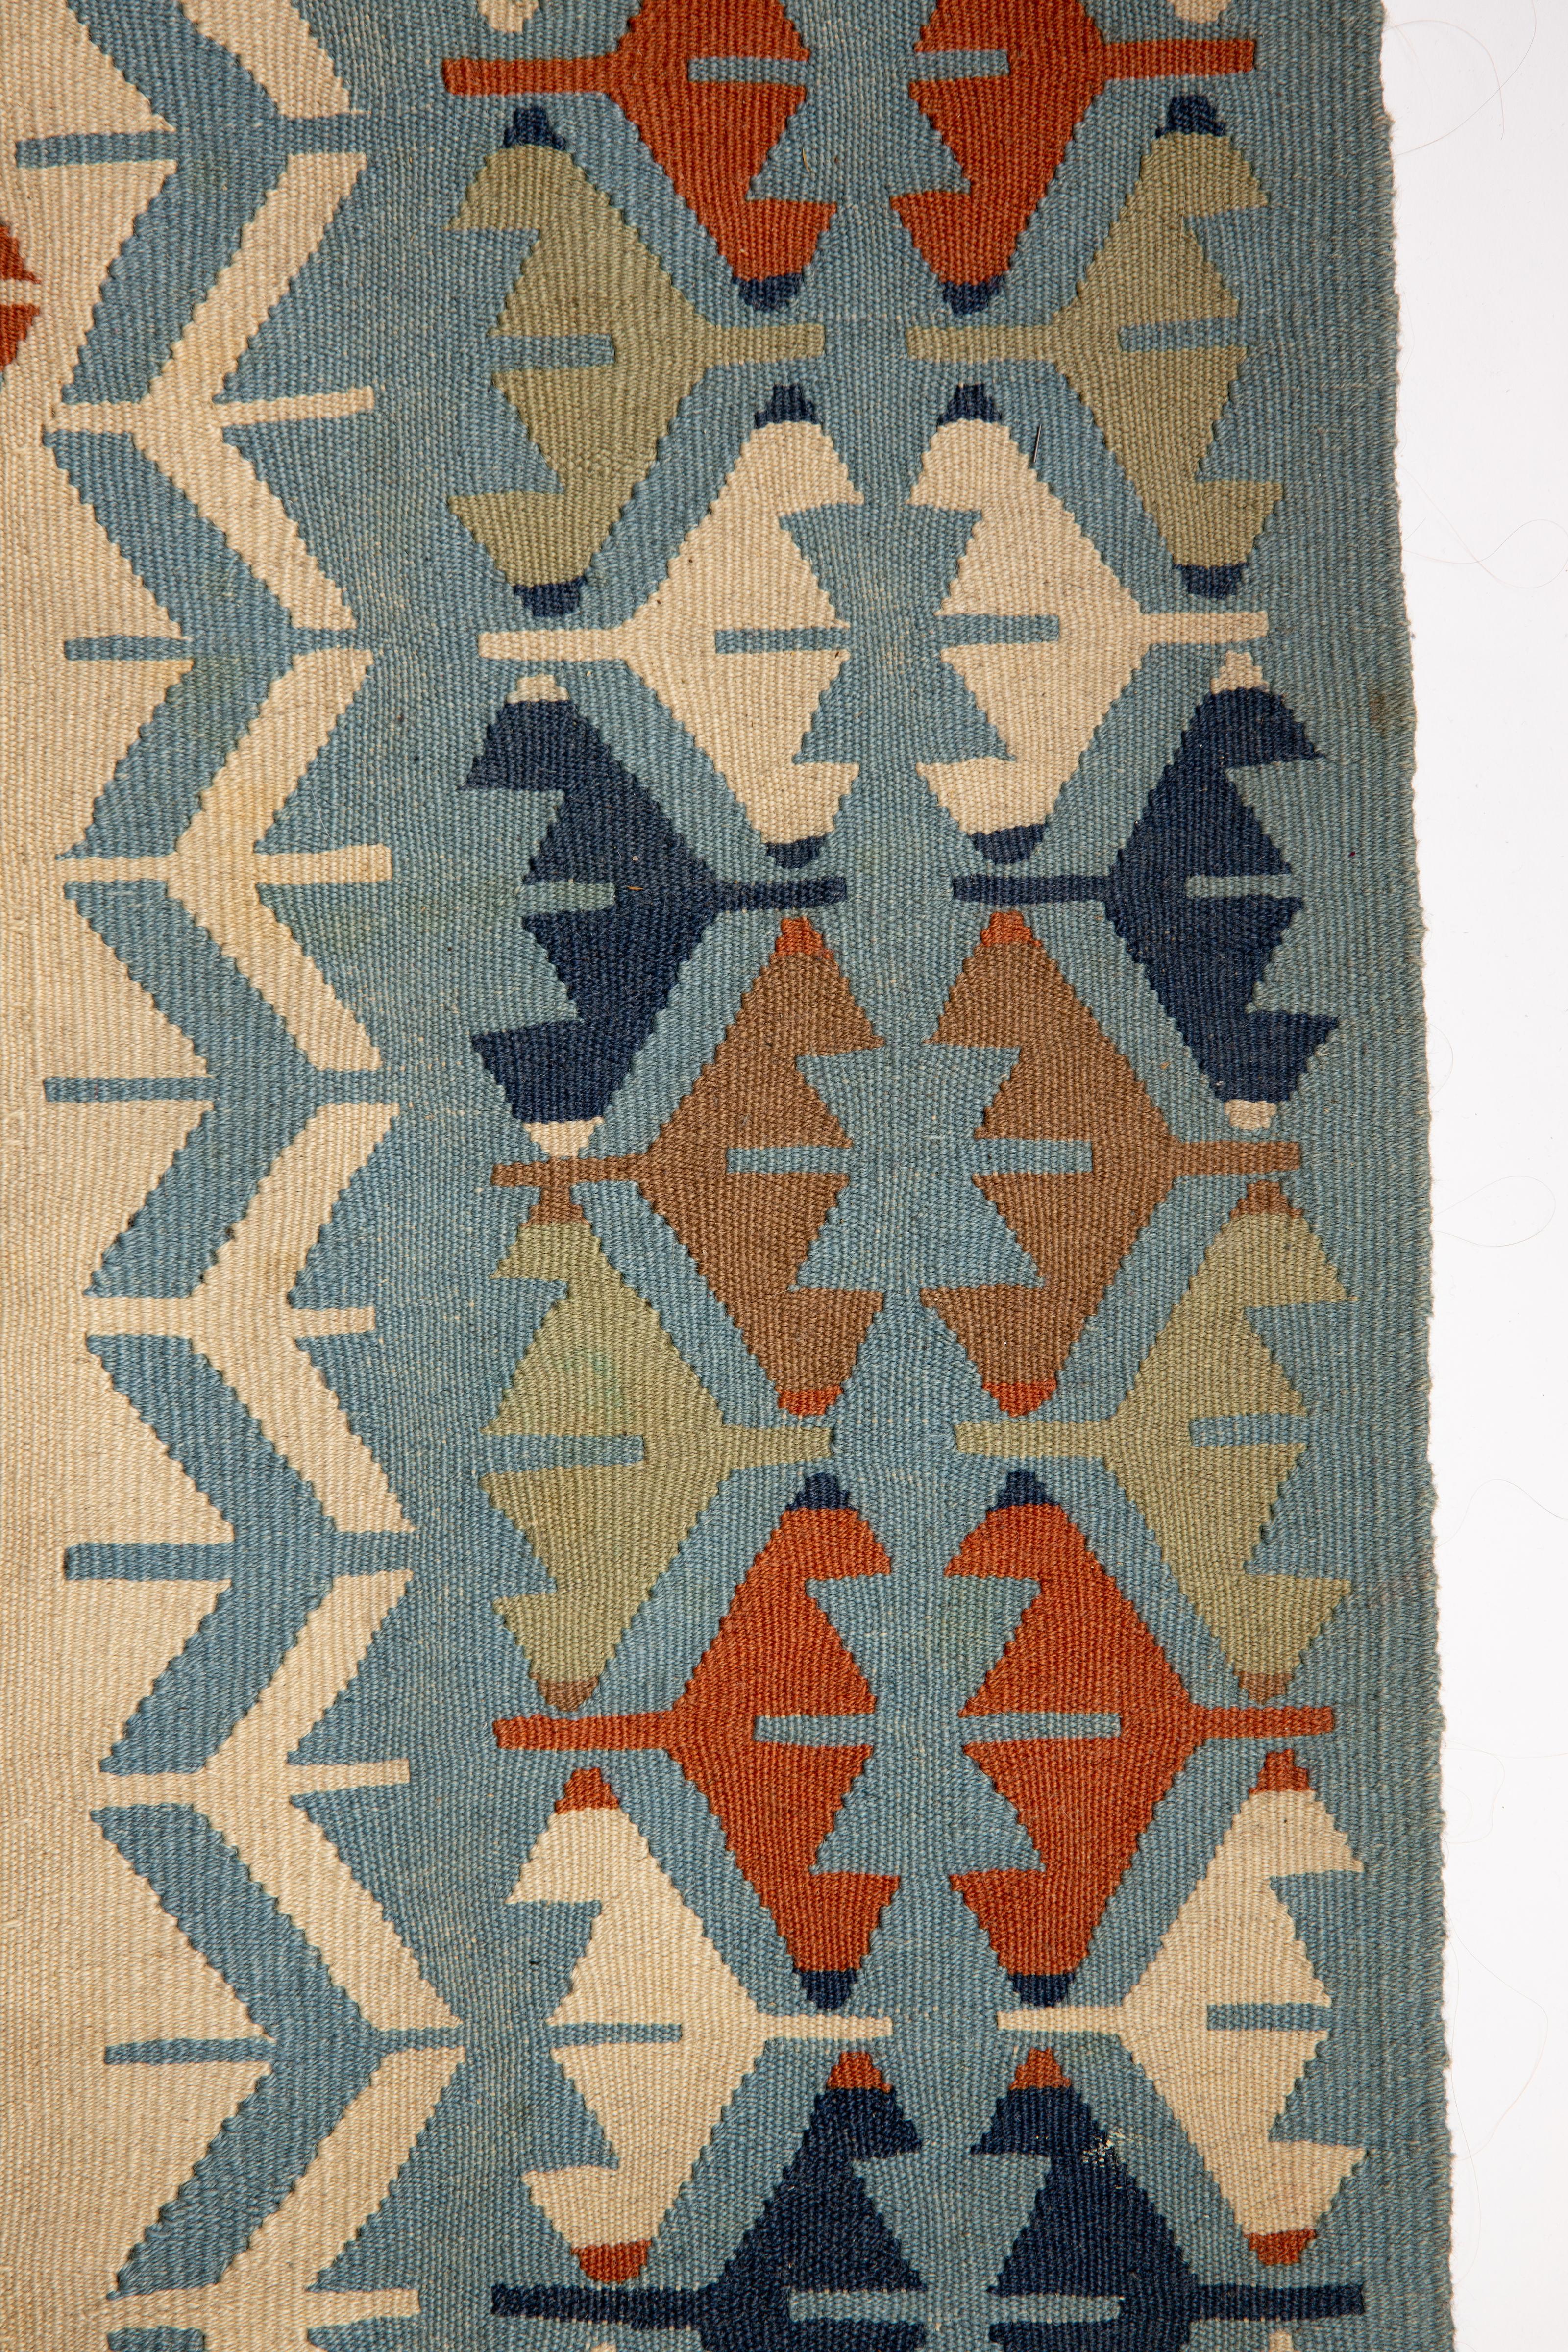 Anatolian Ornate Design Handwoven Wool Kilim Rug For Sale 1